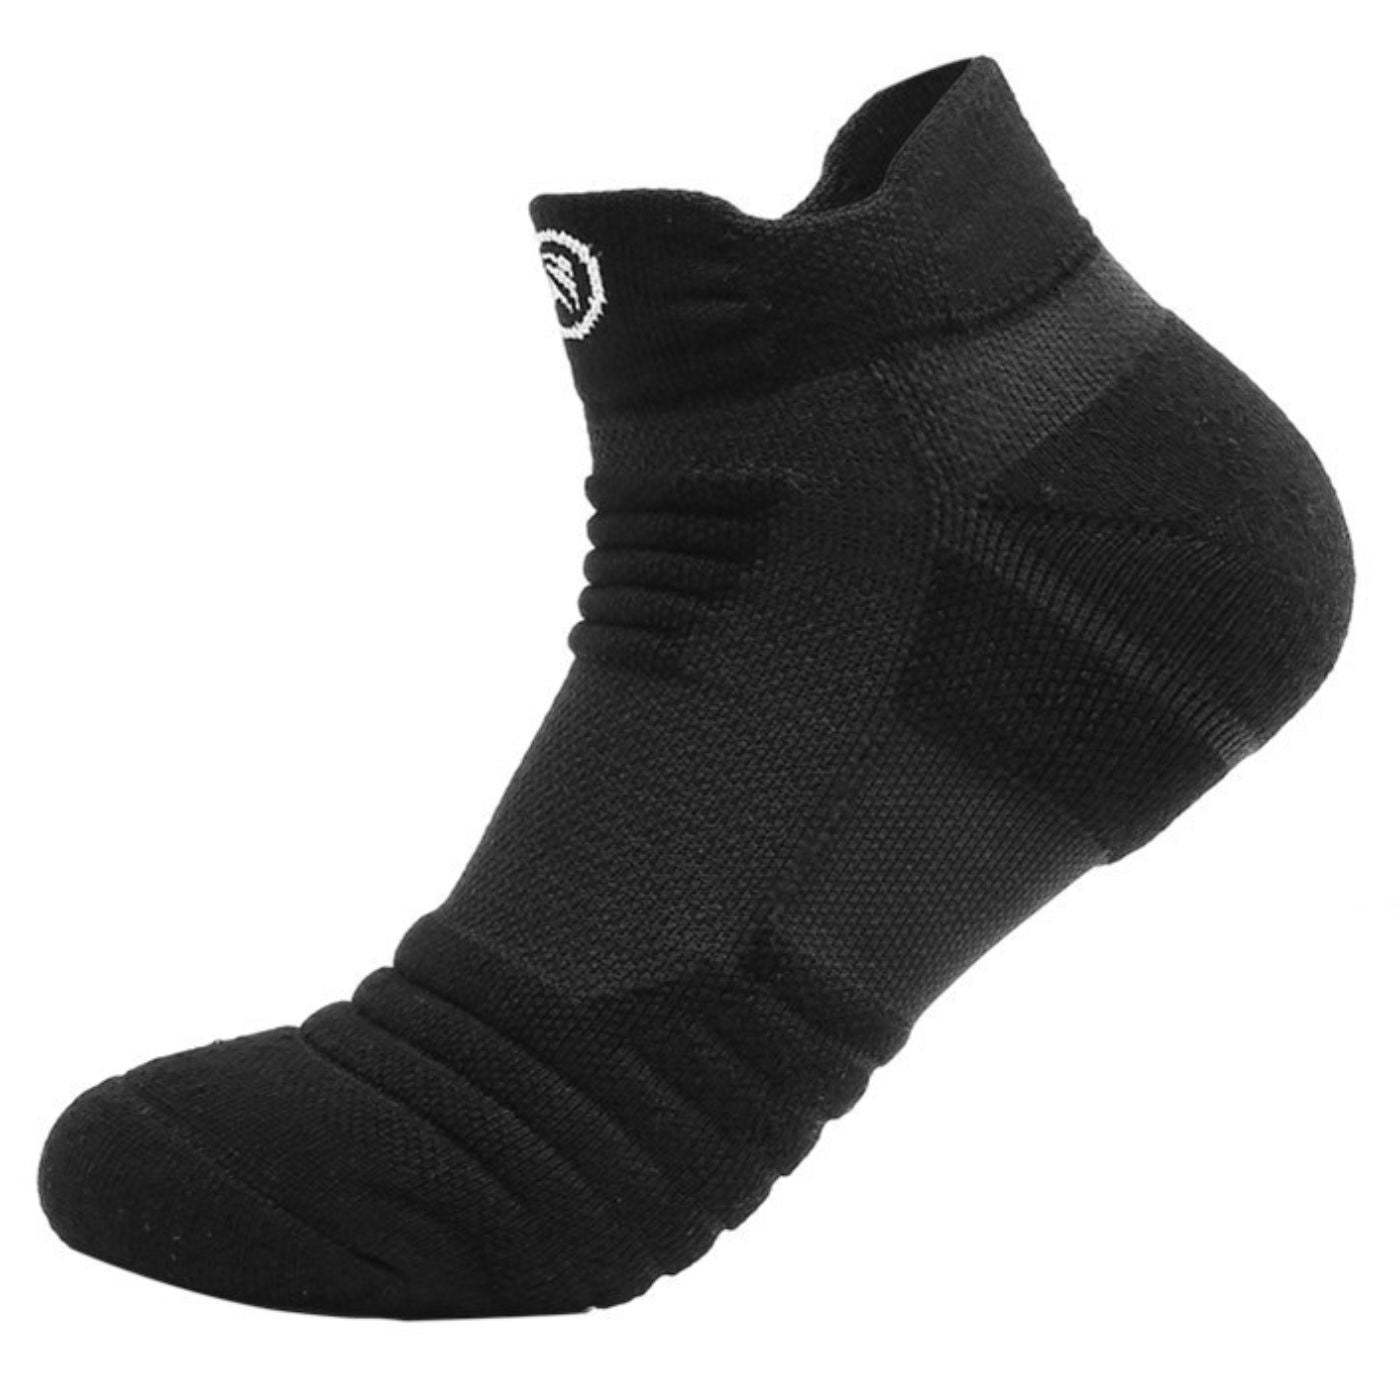 Ankle length black adventure socks